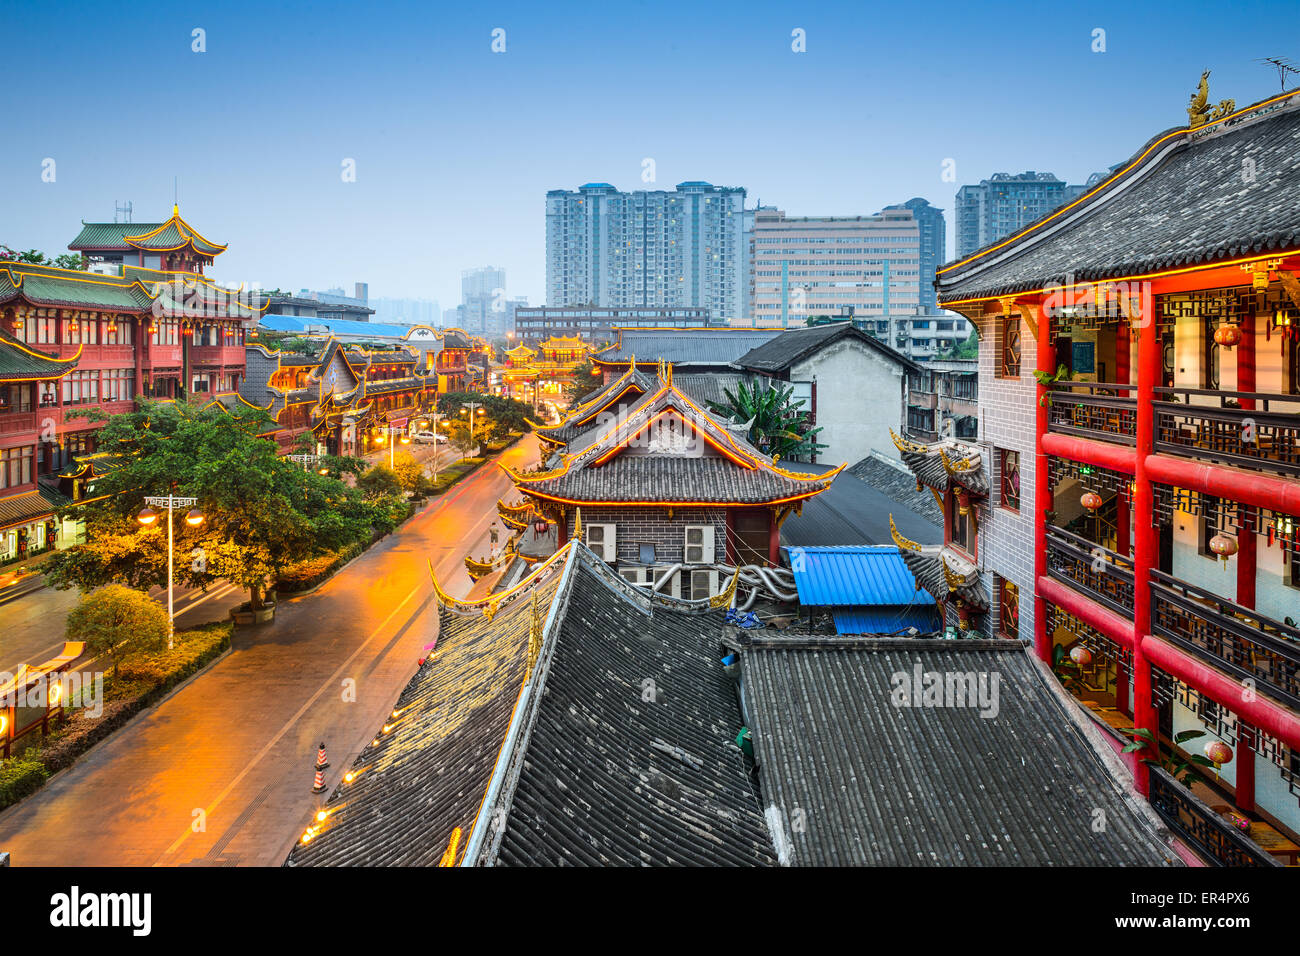 Chengdu, China at traditional Qintai Road district. Stock Photo